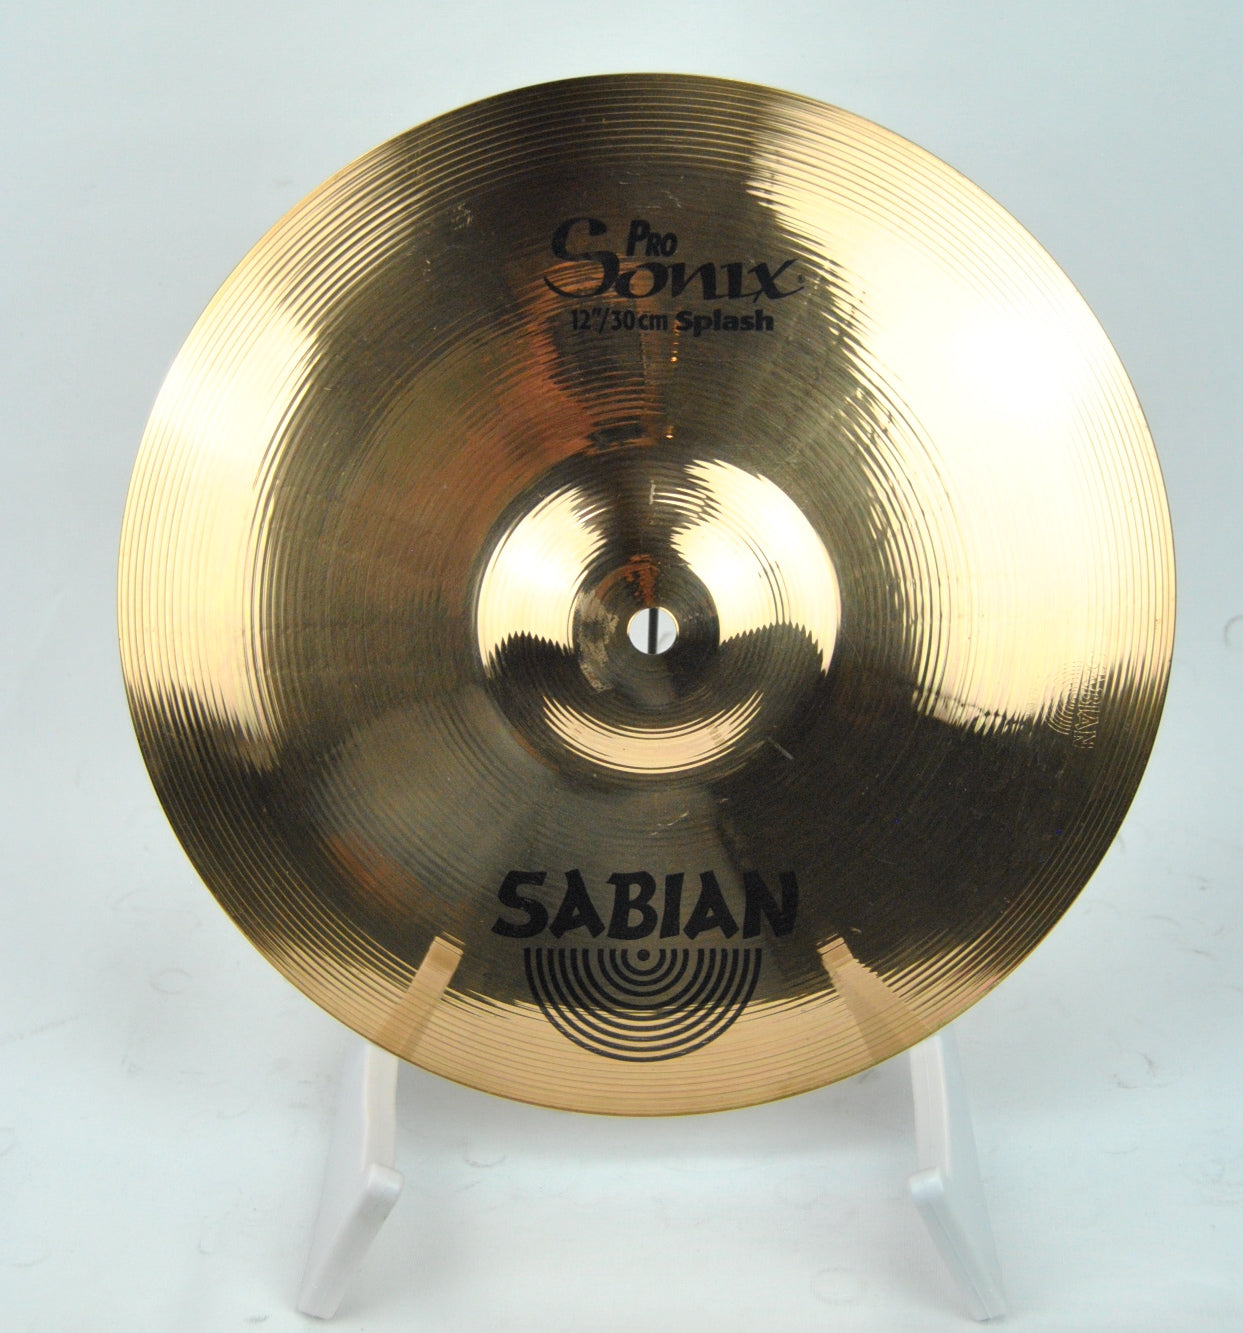 Sabian Pro Sonix 12“ Splash